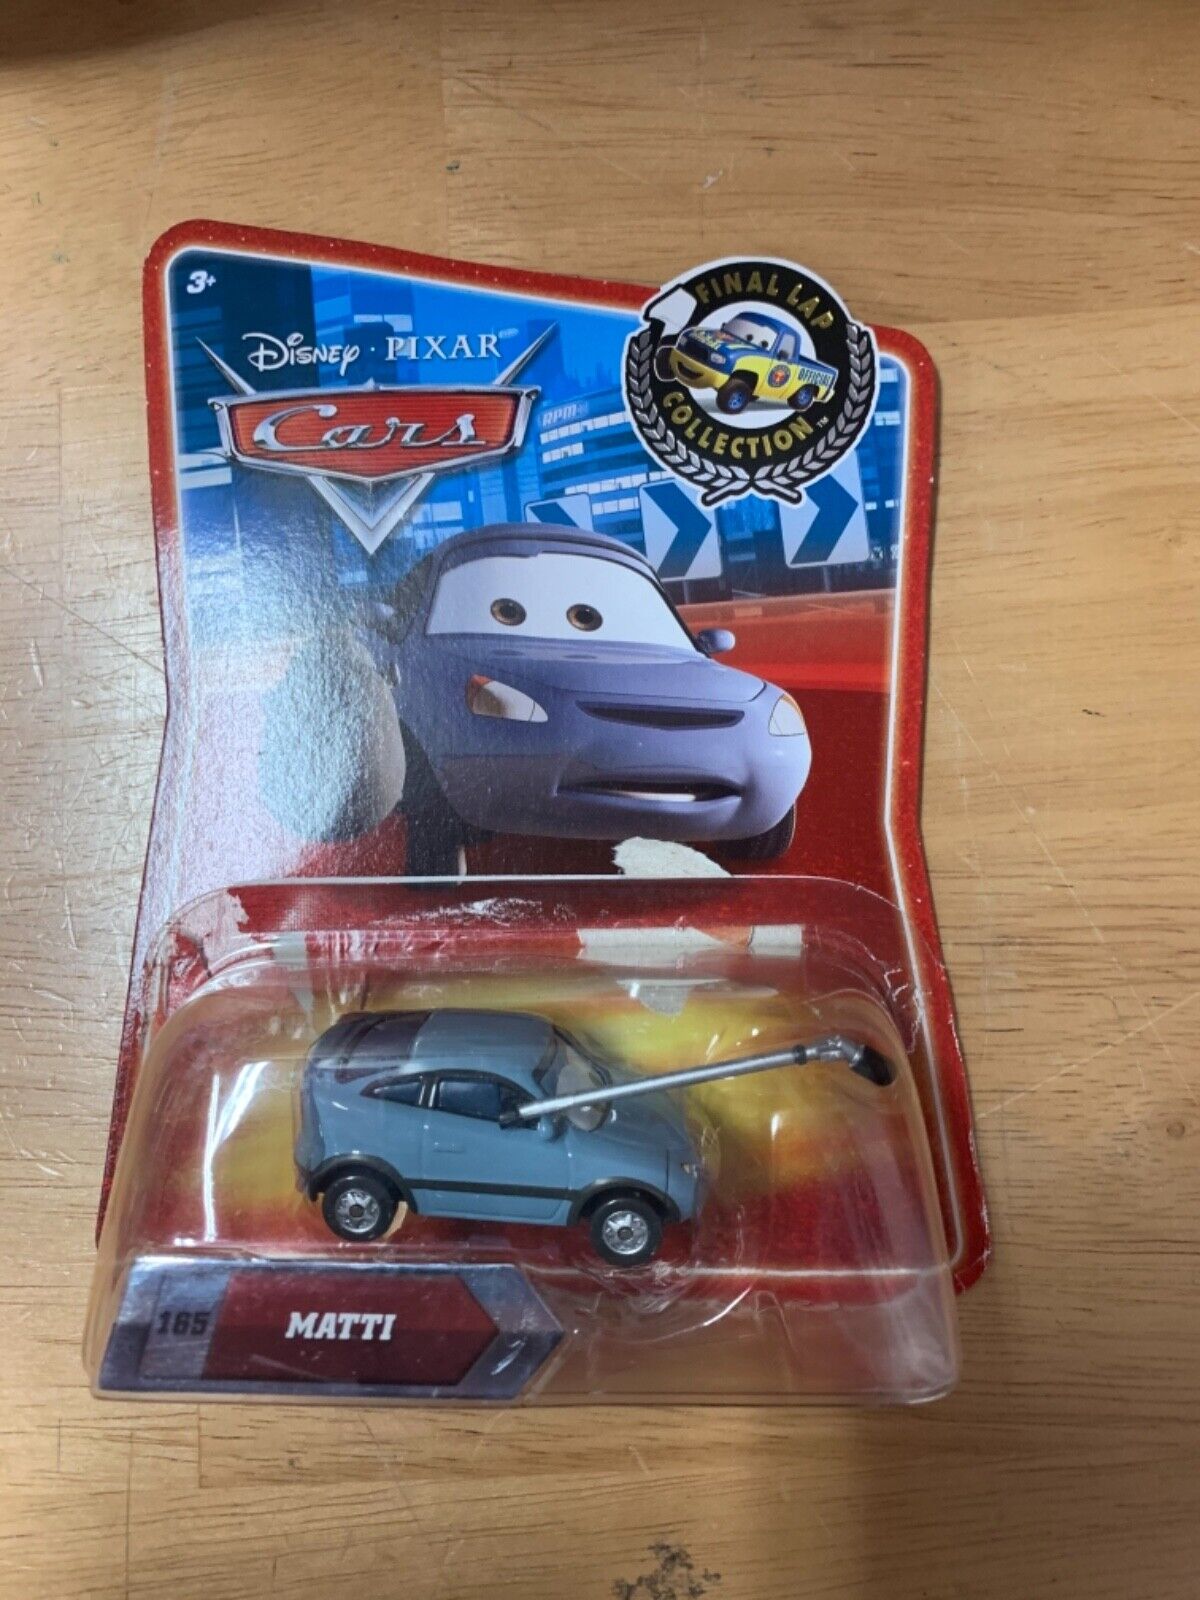 Disney Pixar Cars Matti Opened Final Lap